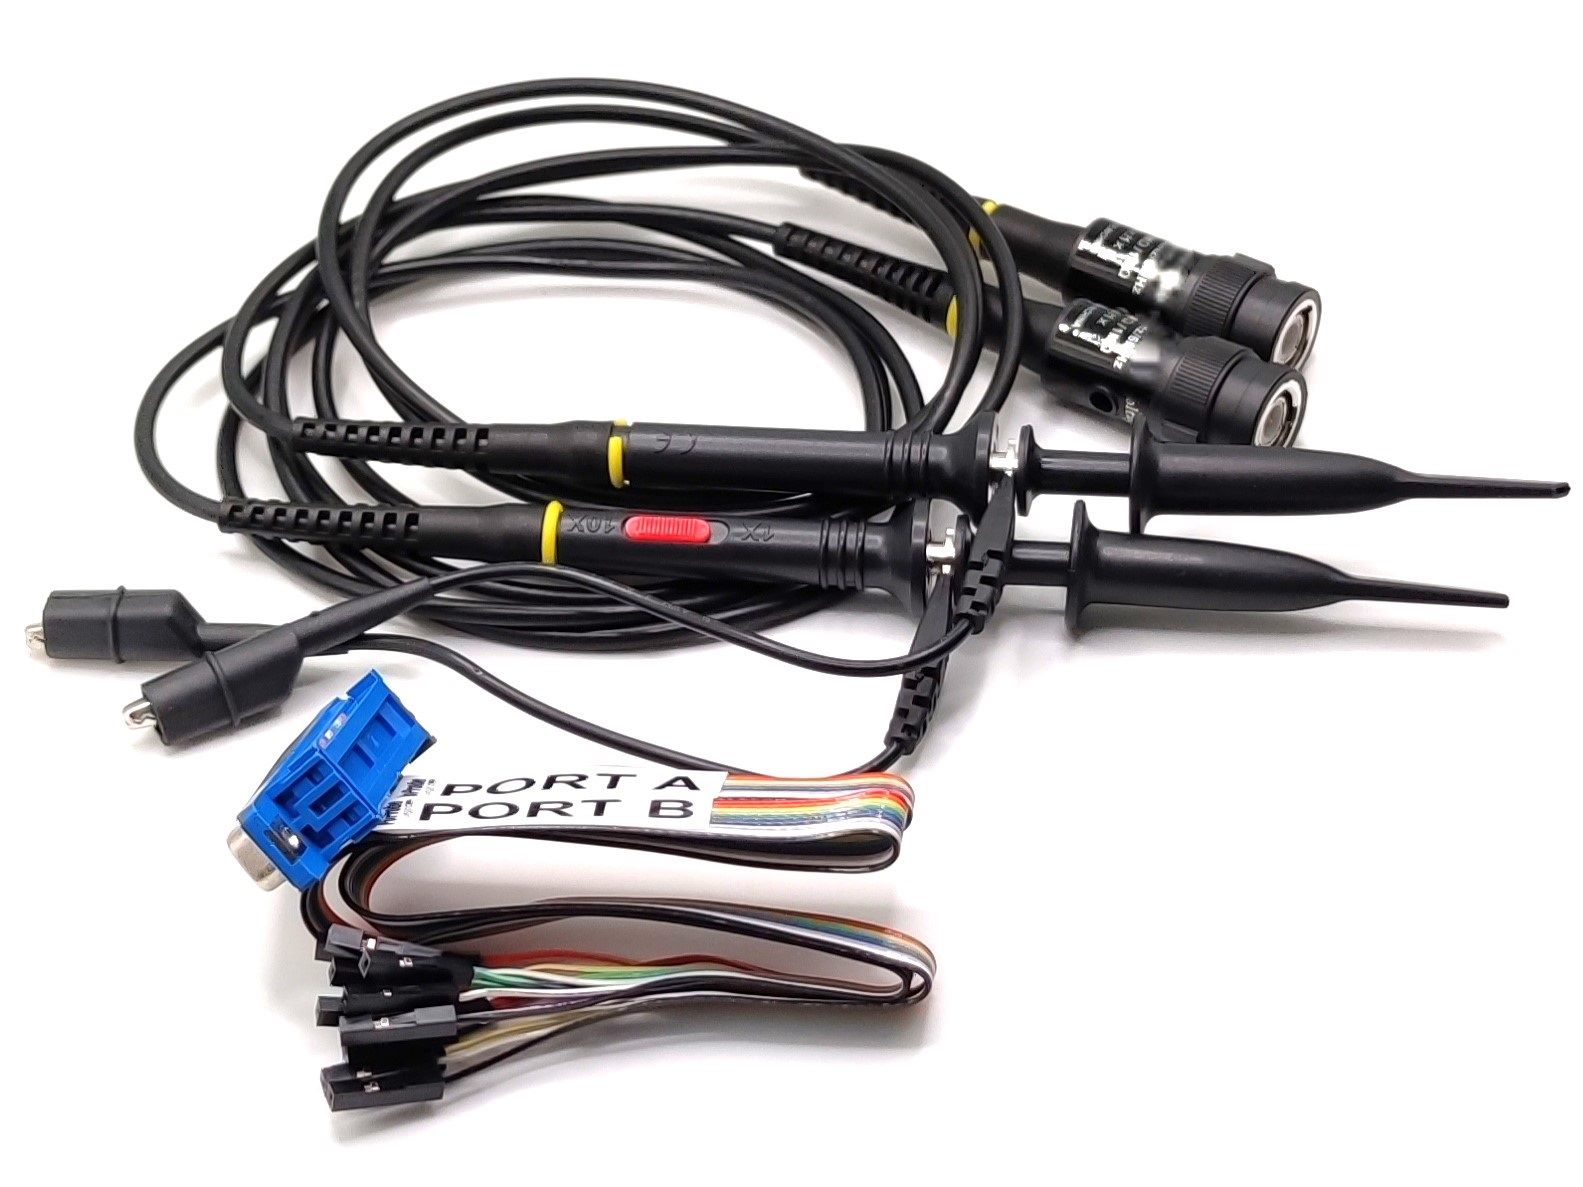 USB oscilloscope Mega50 accessories probe